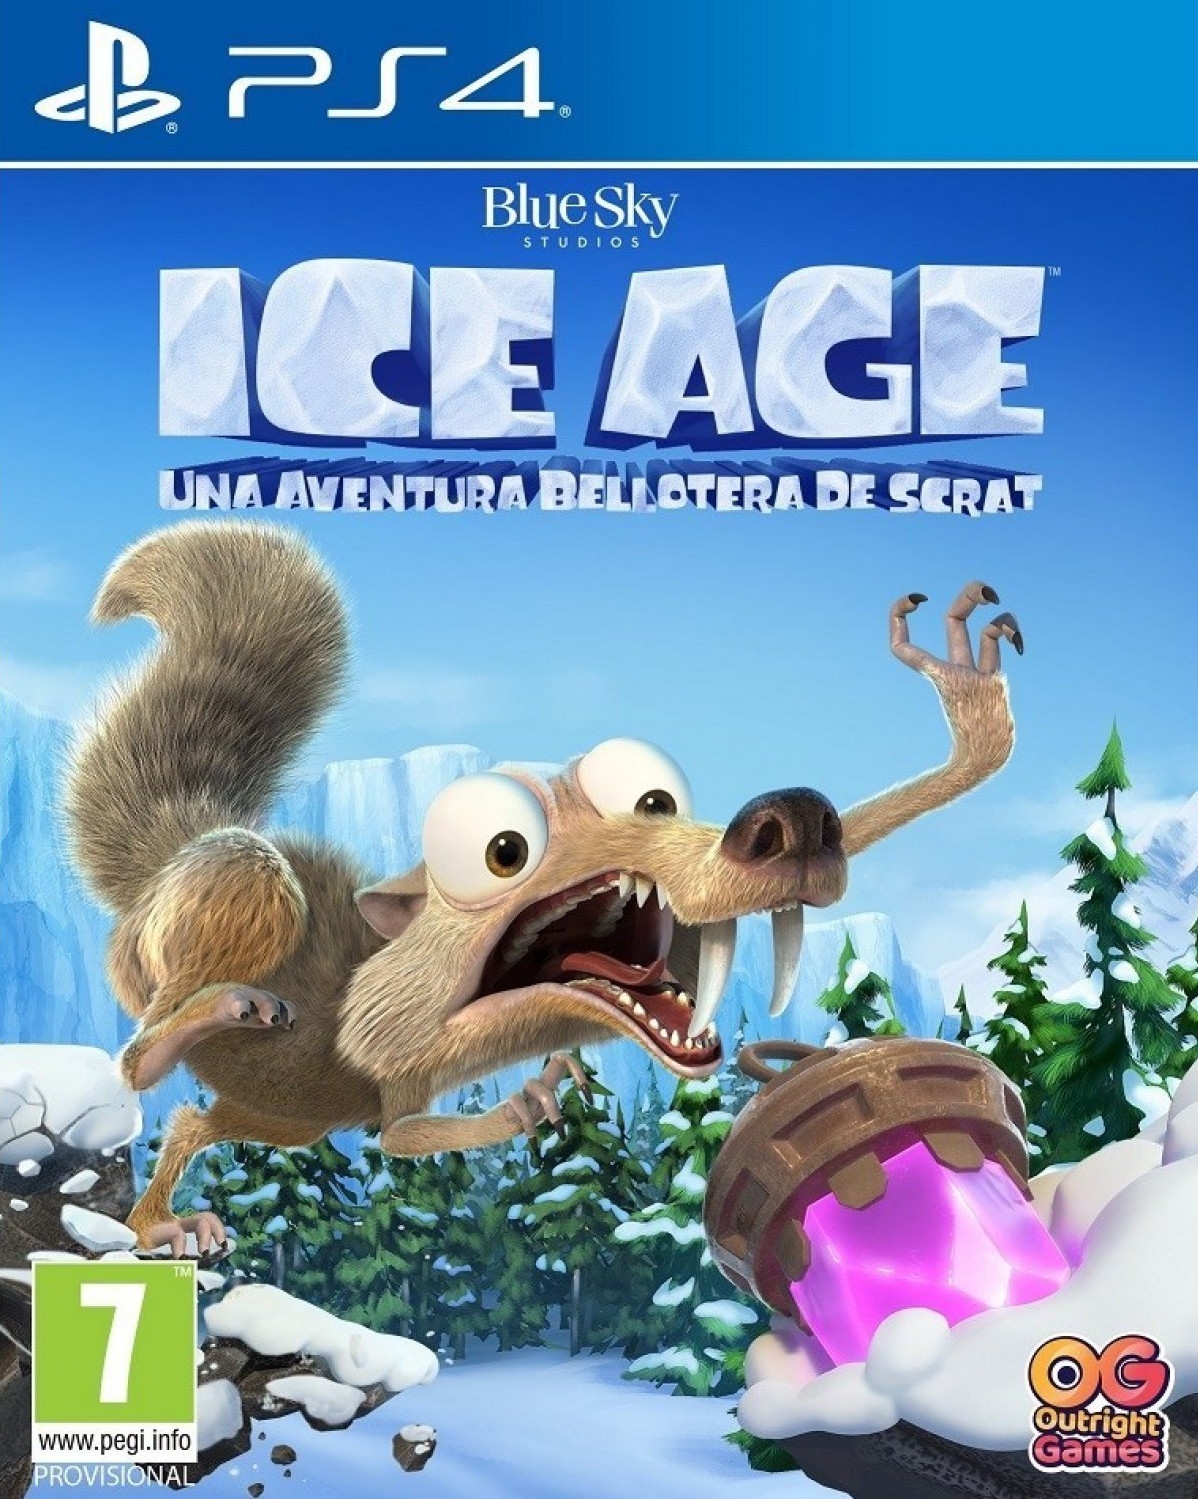 ice age acratz nutty adventure ps4